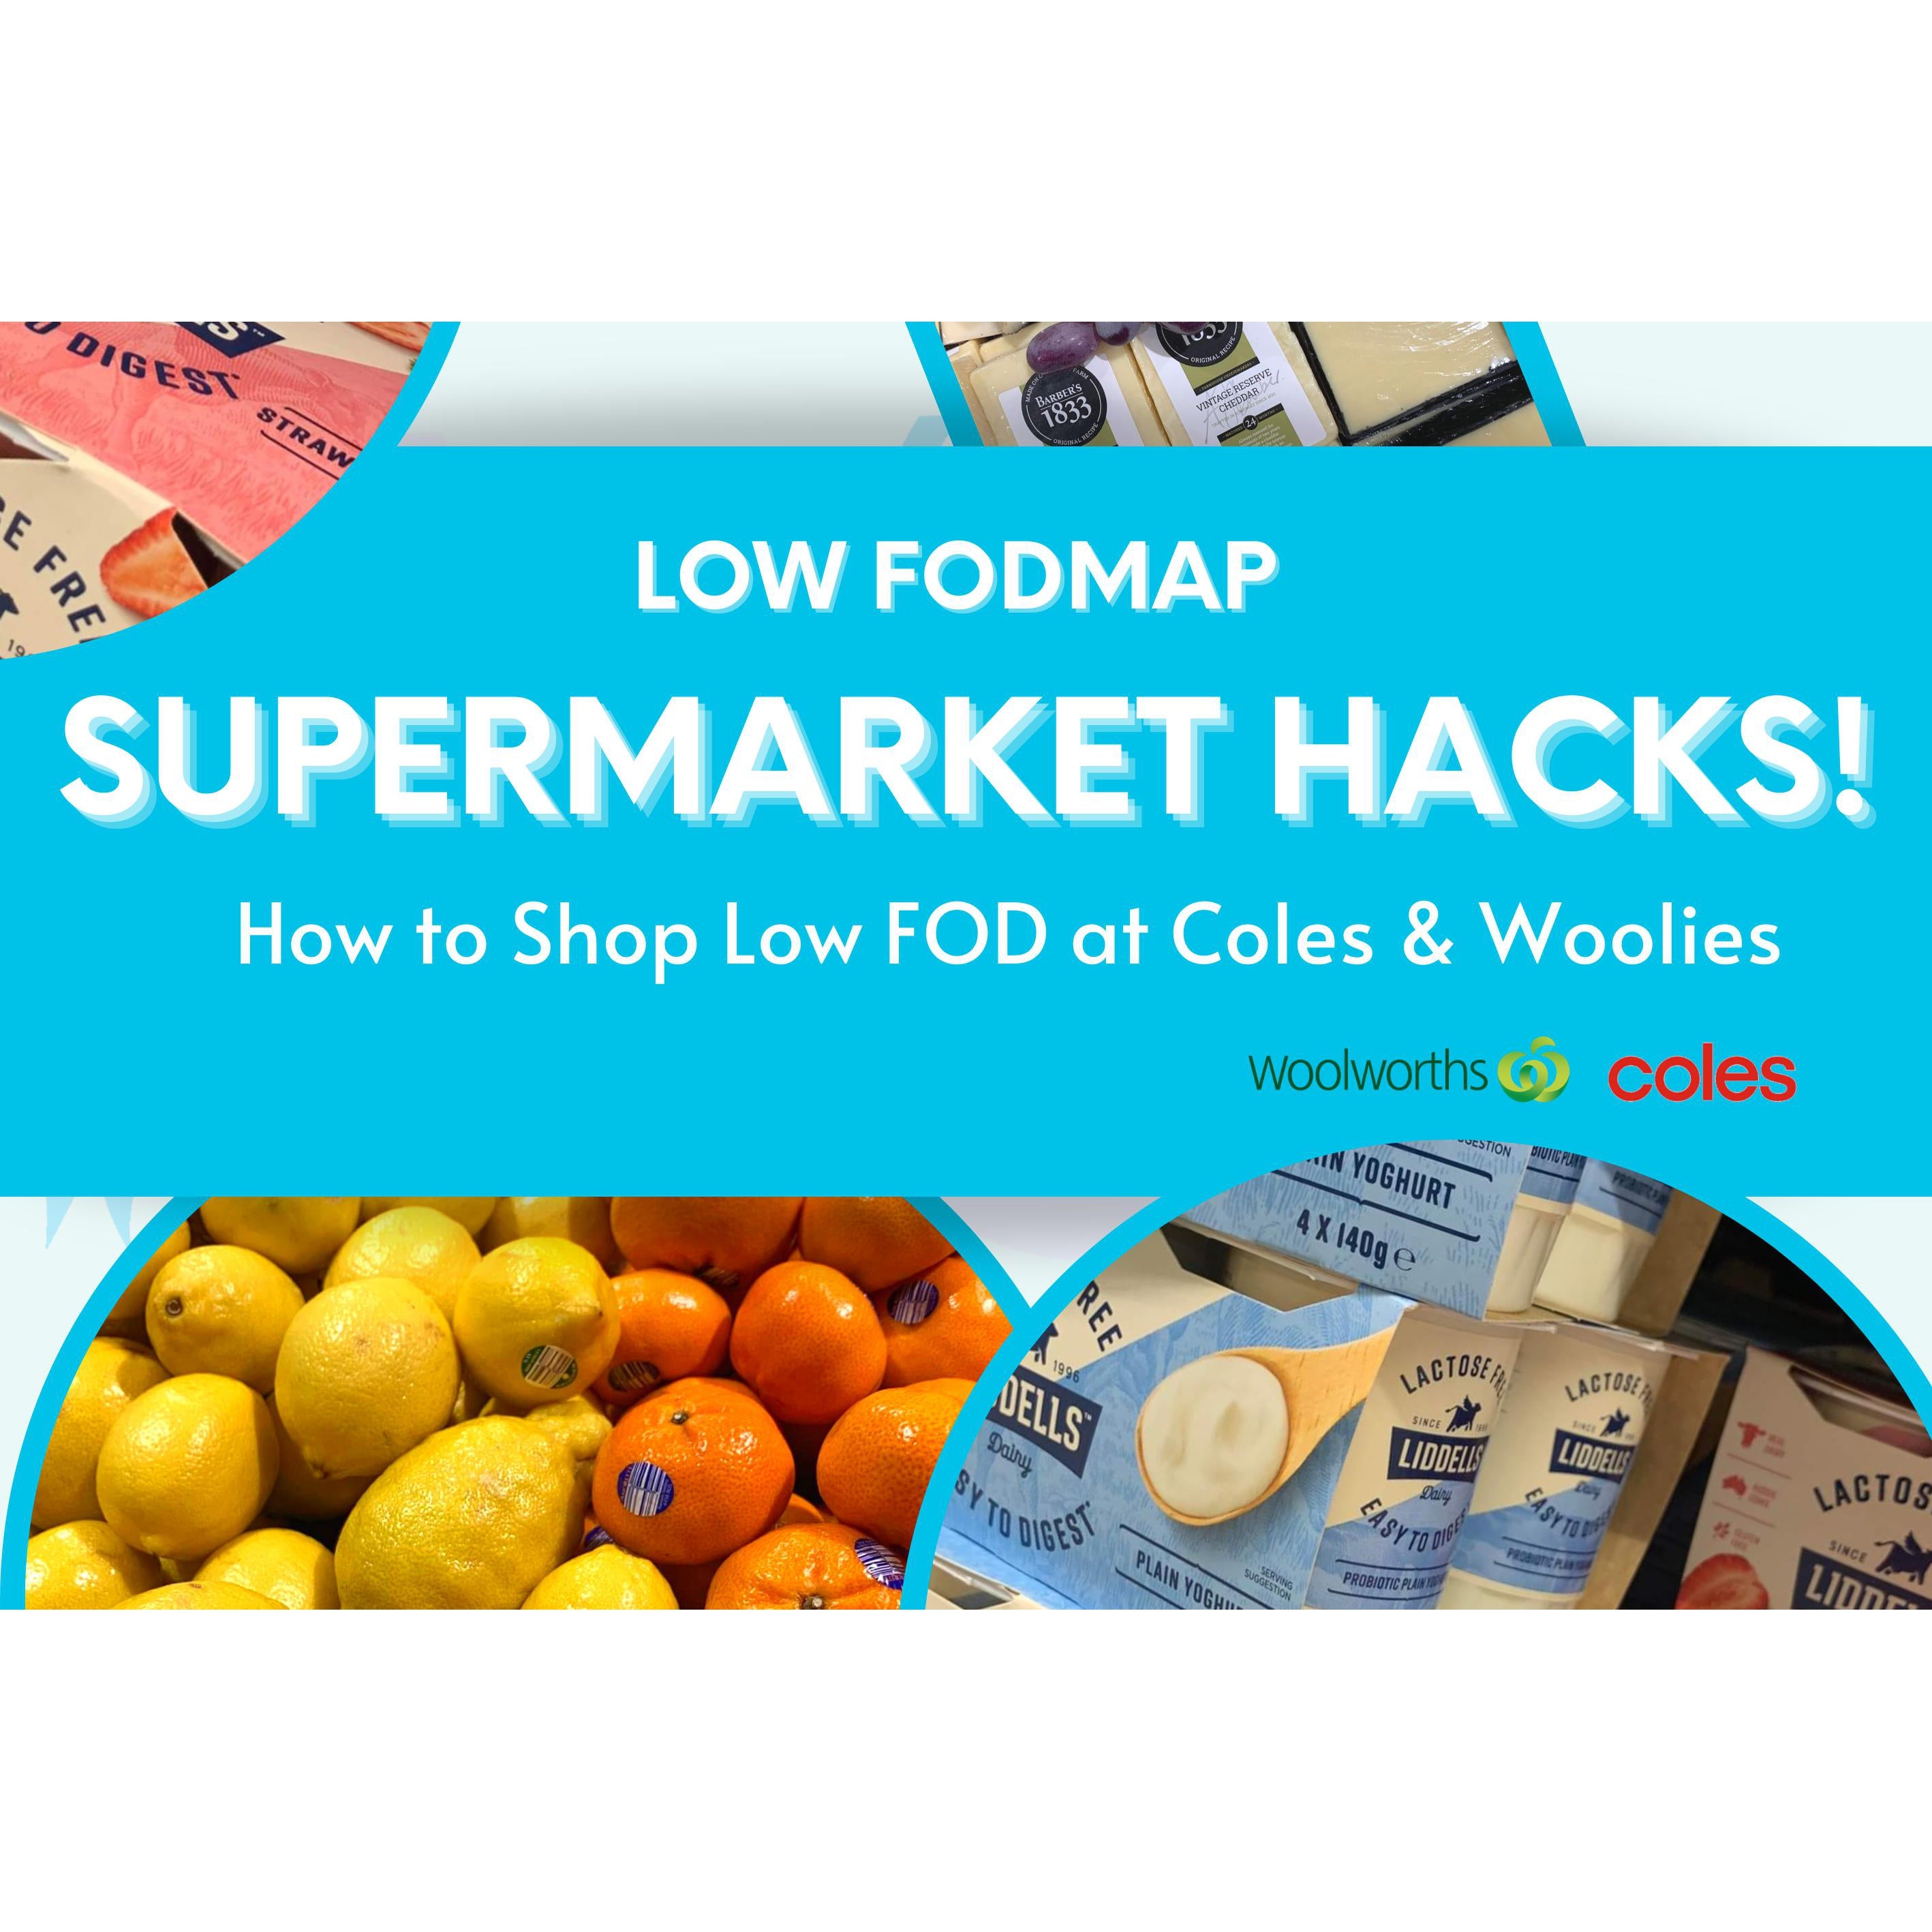 Low FODMAP Supermarket Hacks!